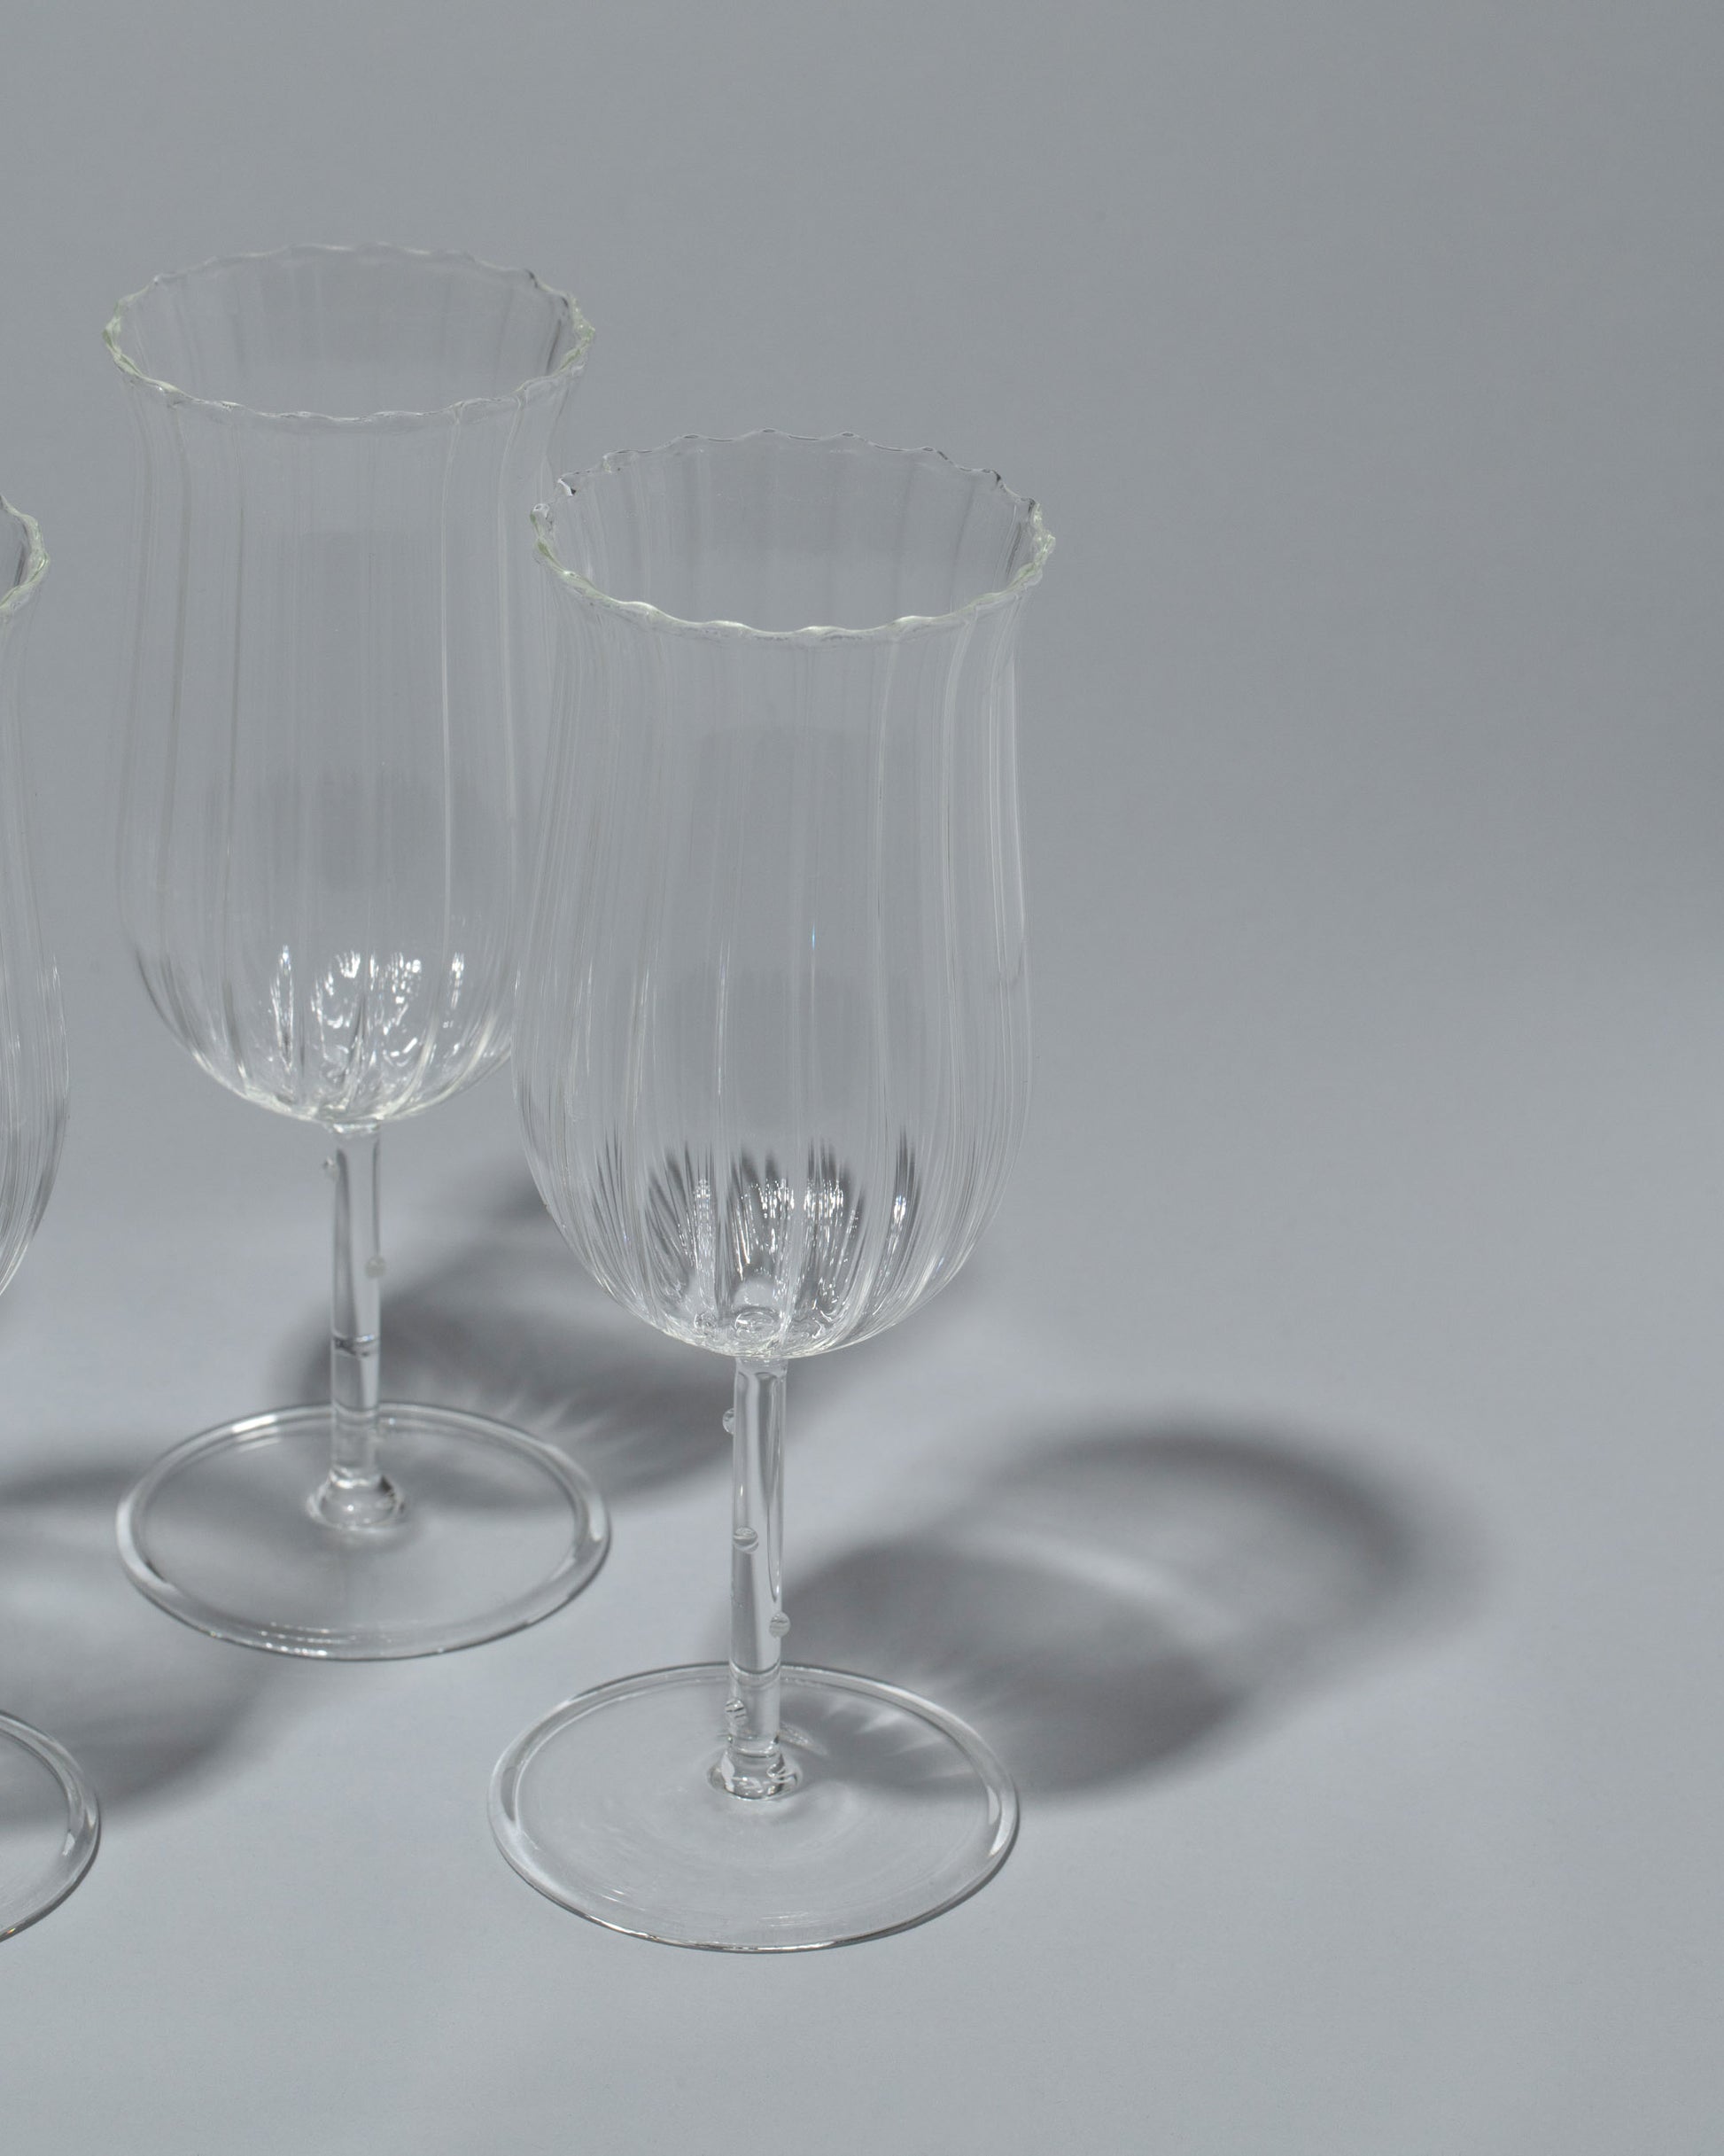 Closeup details of the Sophie Lou Jacobsen Tulip Wine Glass Set on light color background.